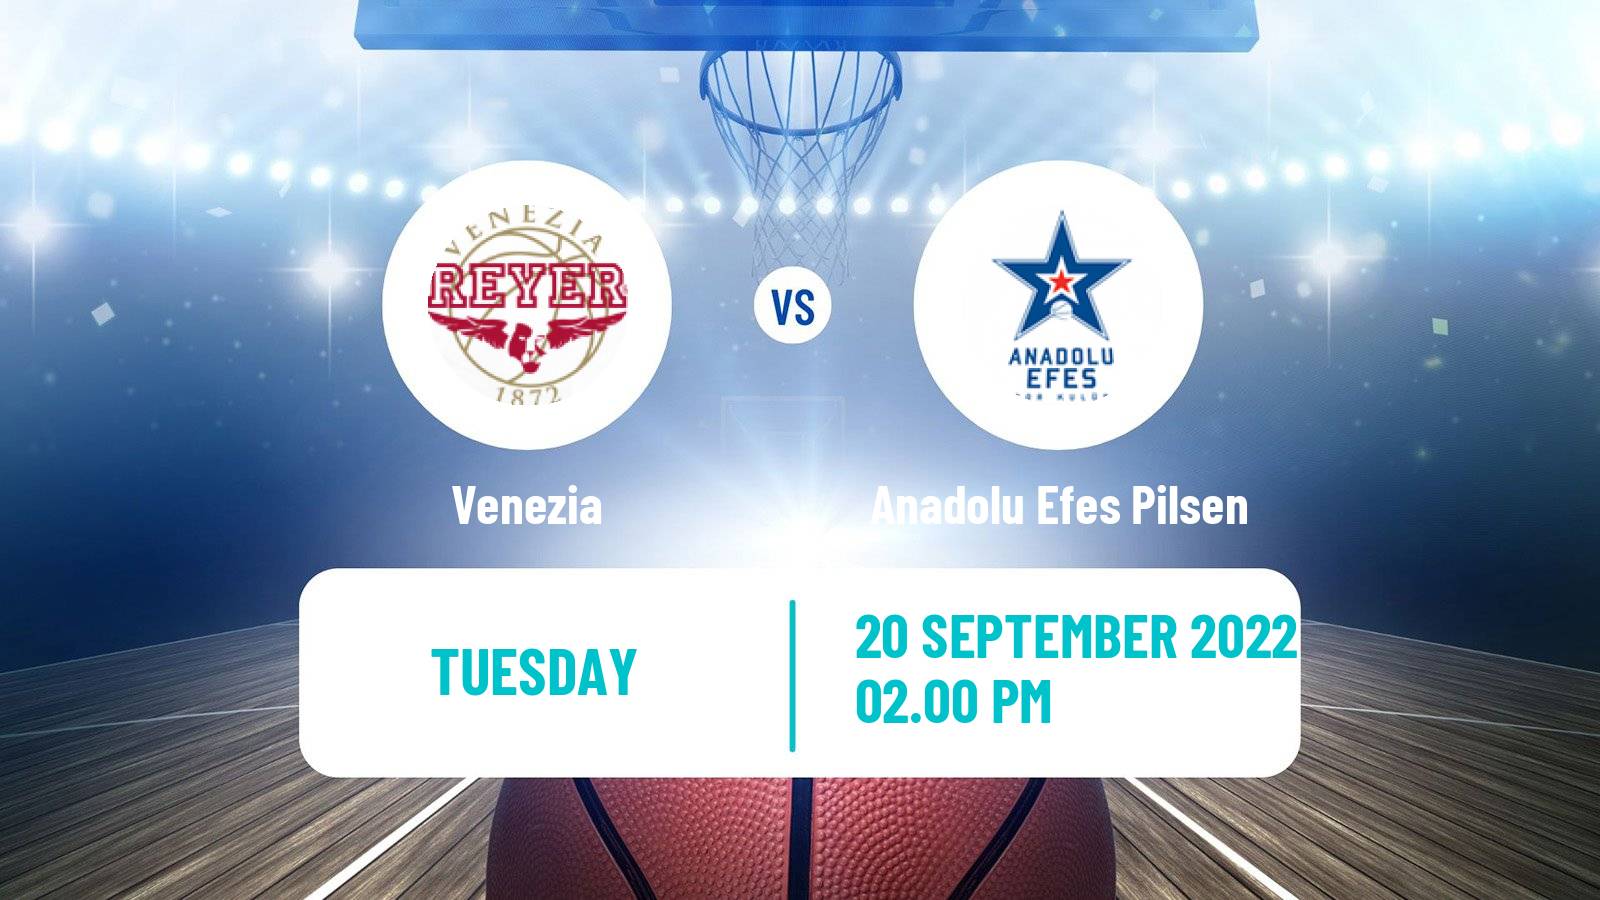 Basketball Club Friendly Basketball Venezia - Anadolu Efes Pilsen